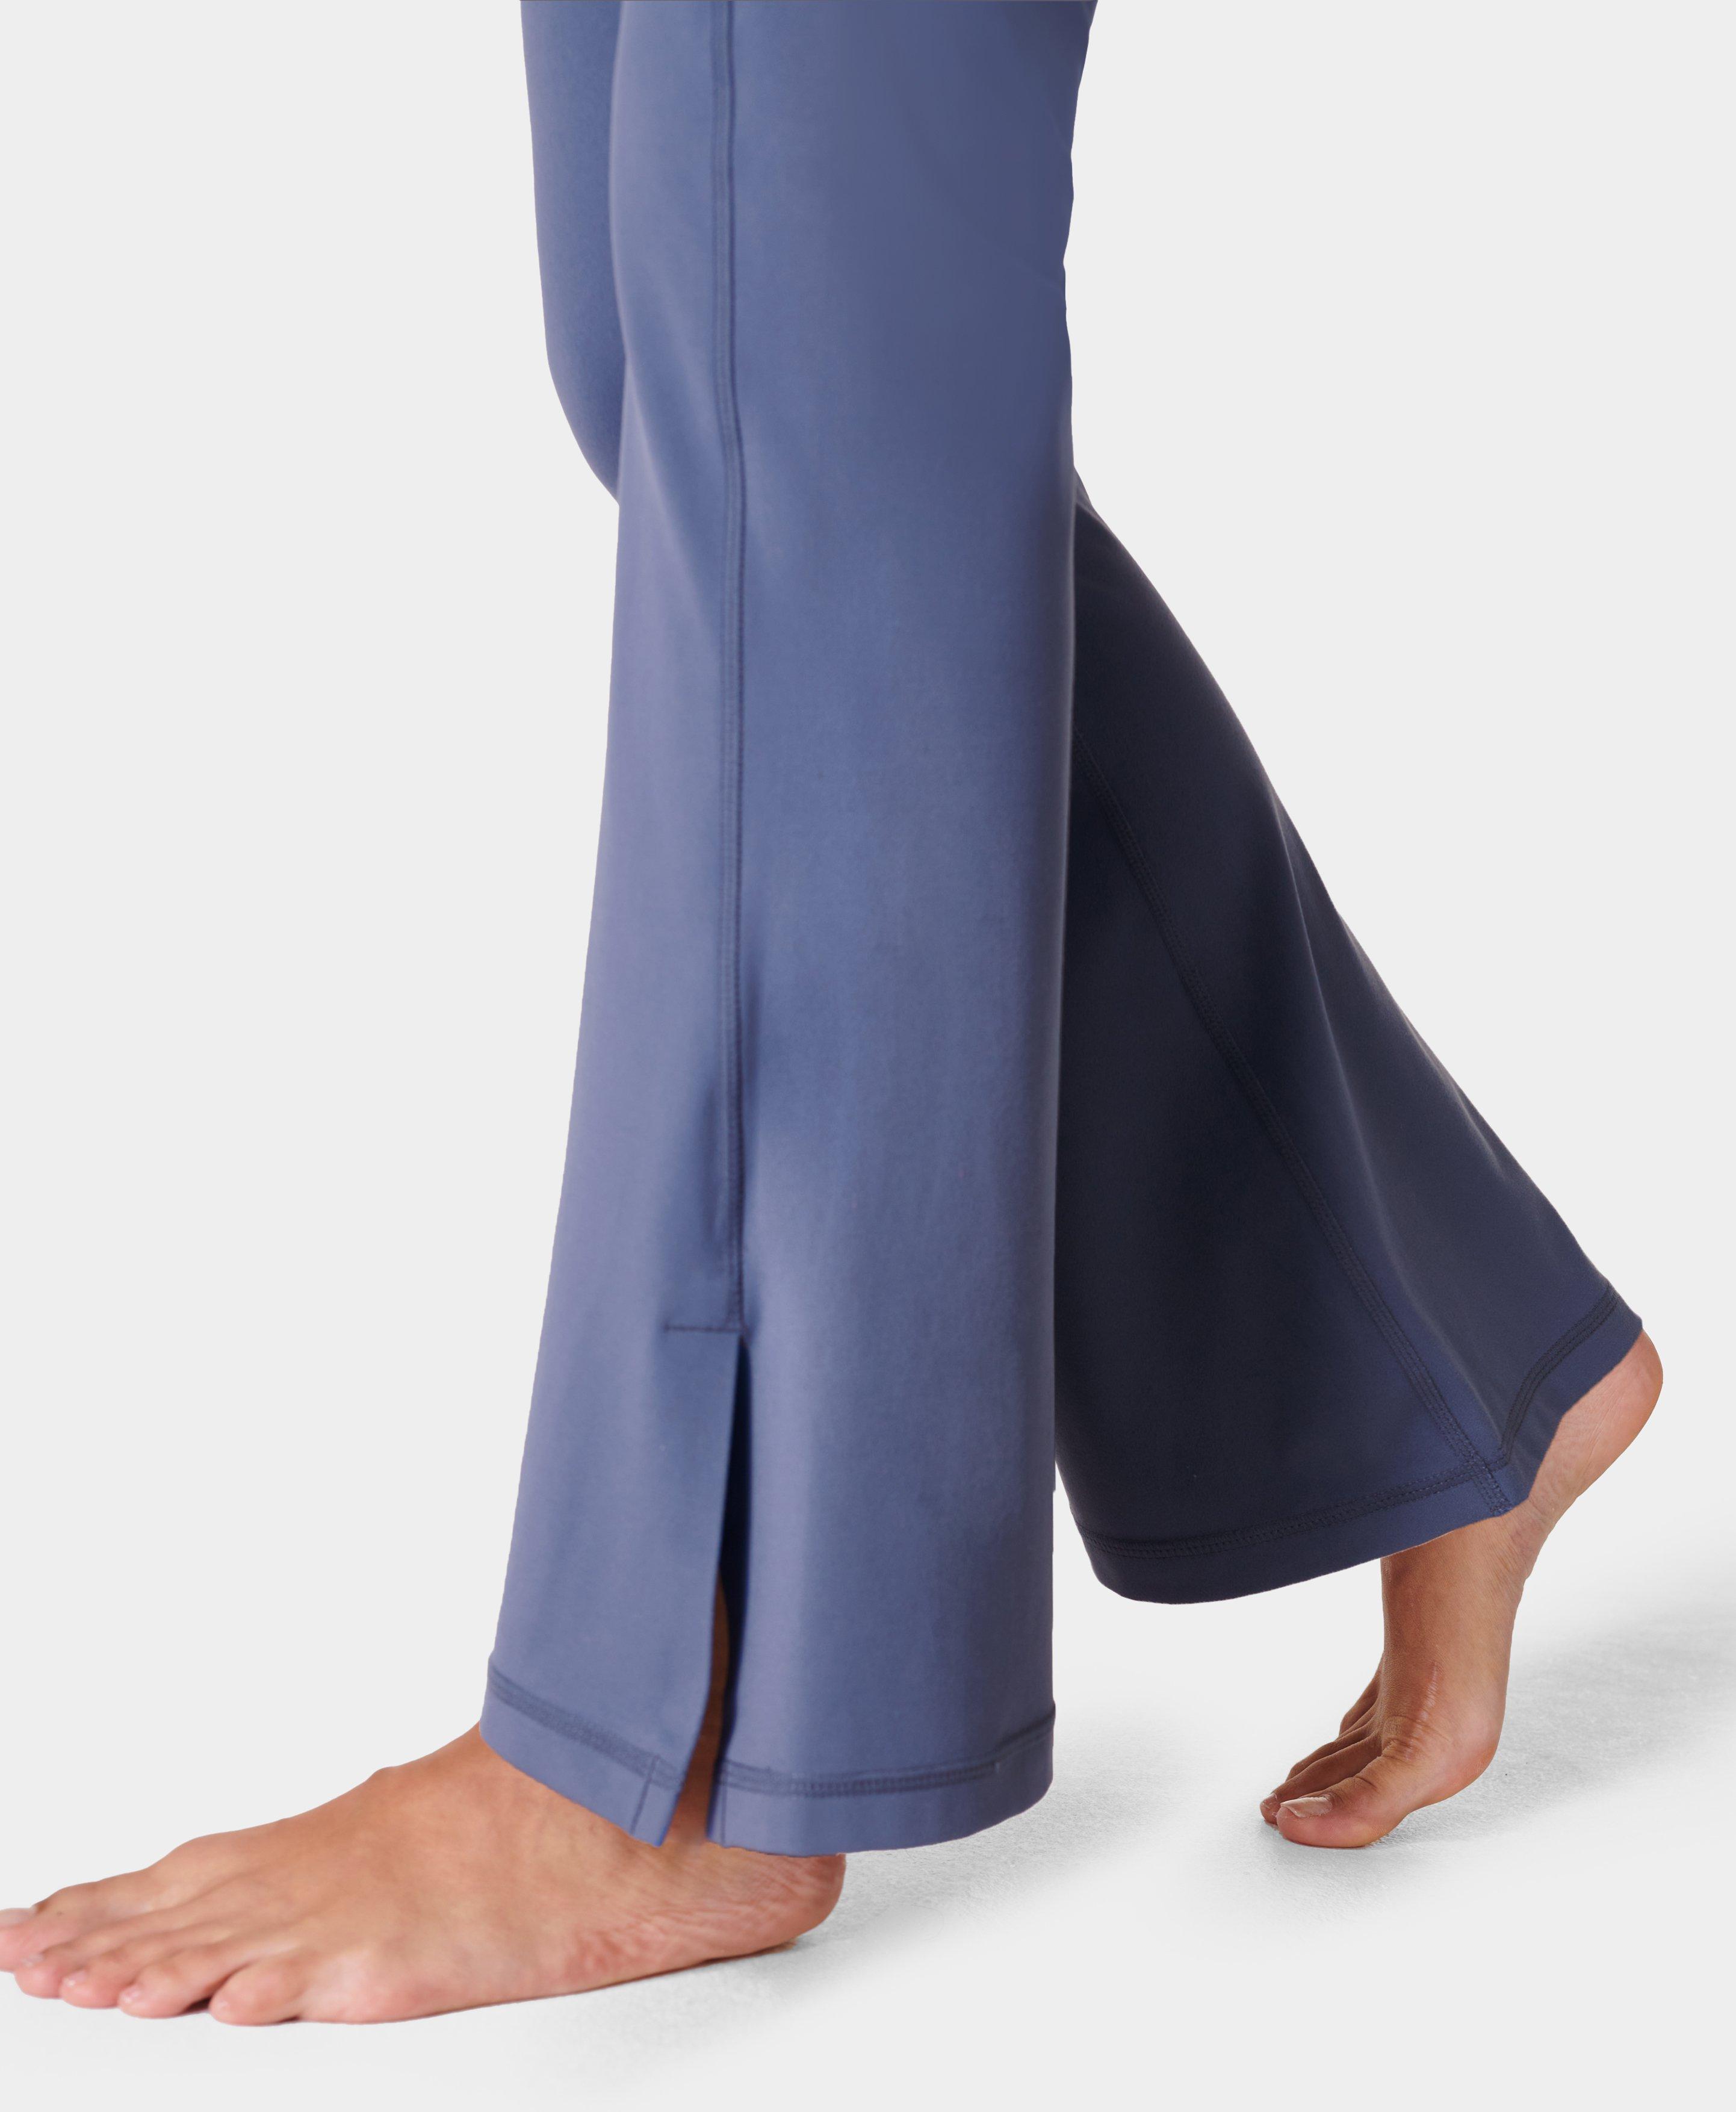 Super Soft Flare Yoga Trousers - Endless Blue